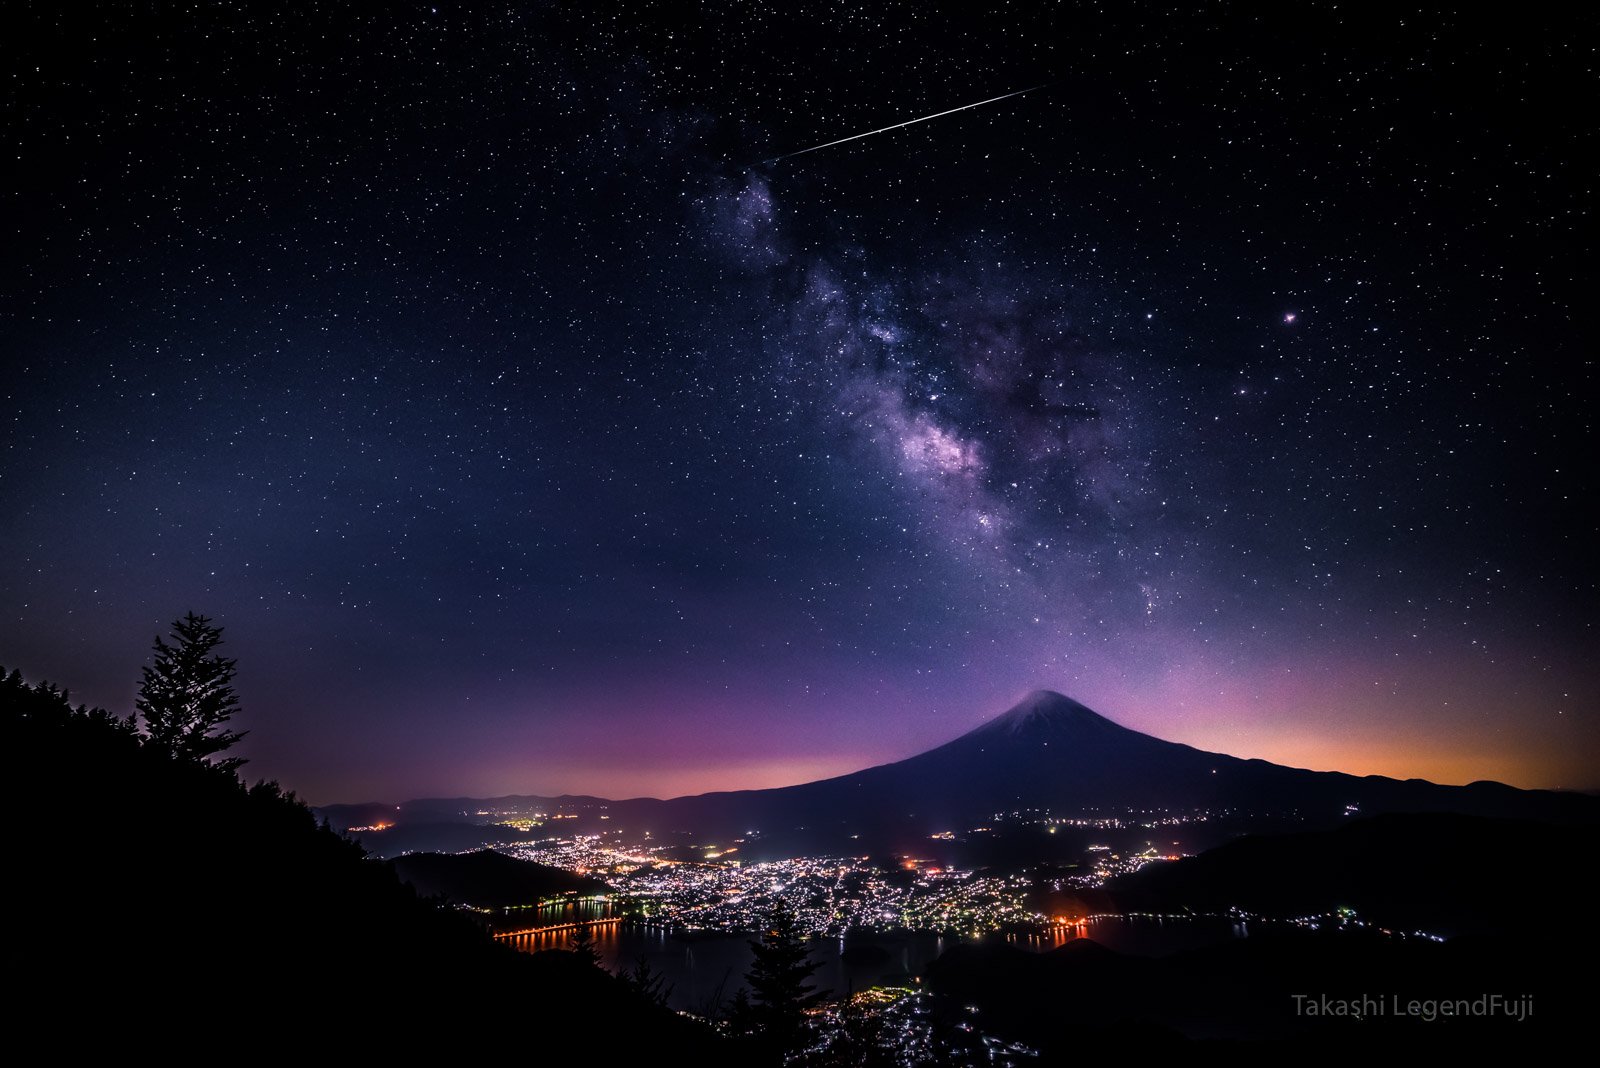 fuji,mountain,japan,milky way,galaxy,star,shooting star,beam,sky,blue,purple,night, Takashi